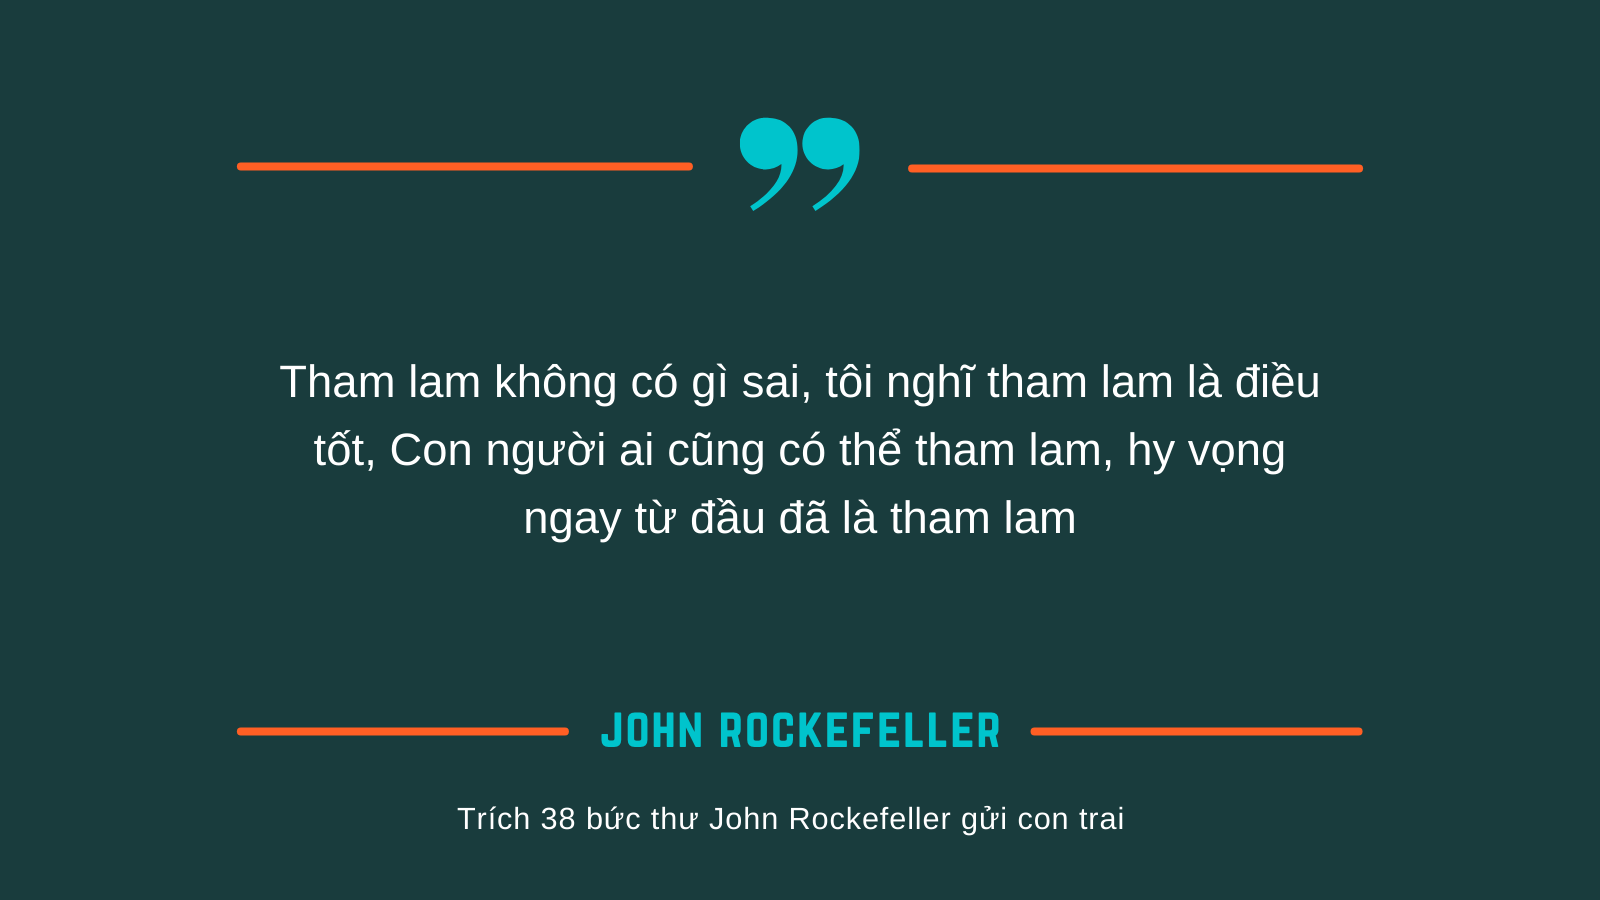 38 buc thu gui con trai cua John Rockefeller 15